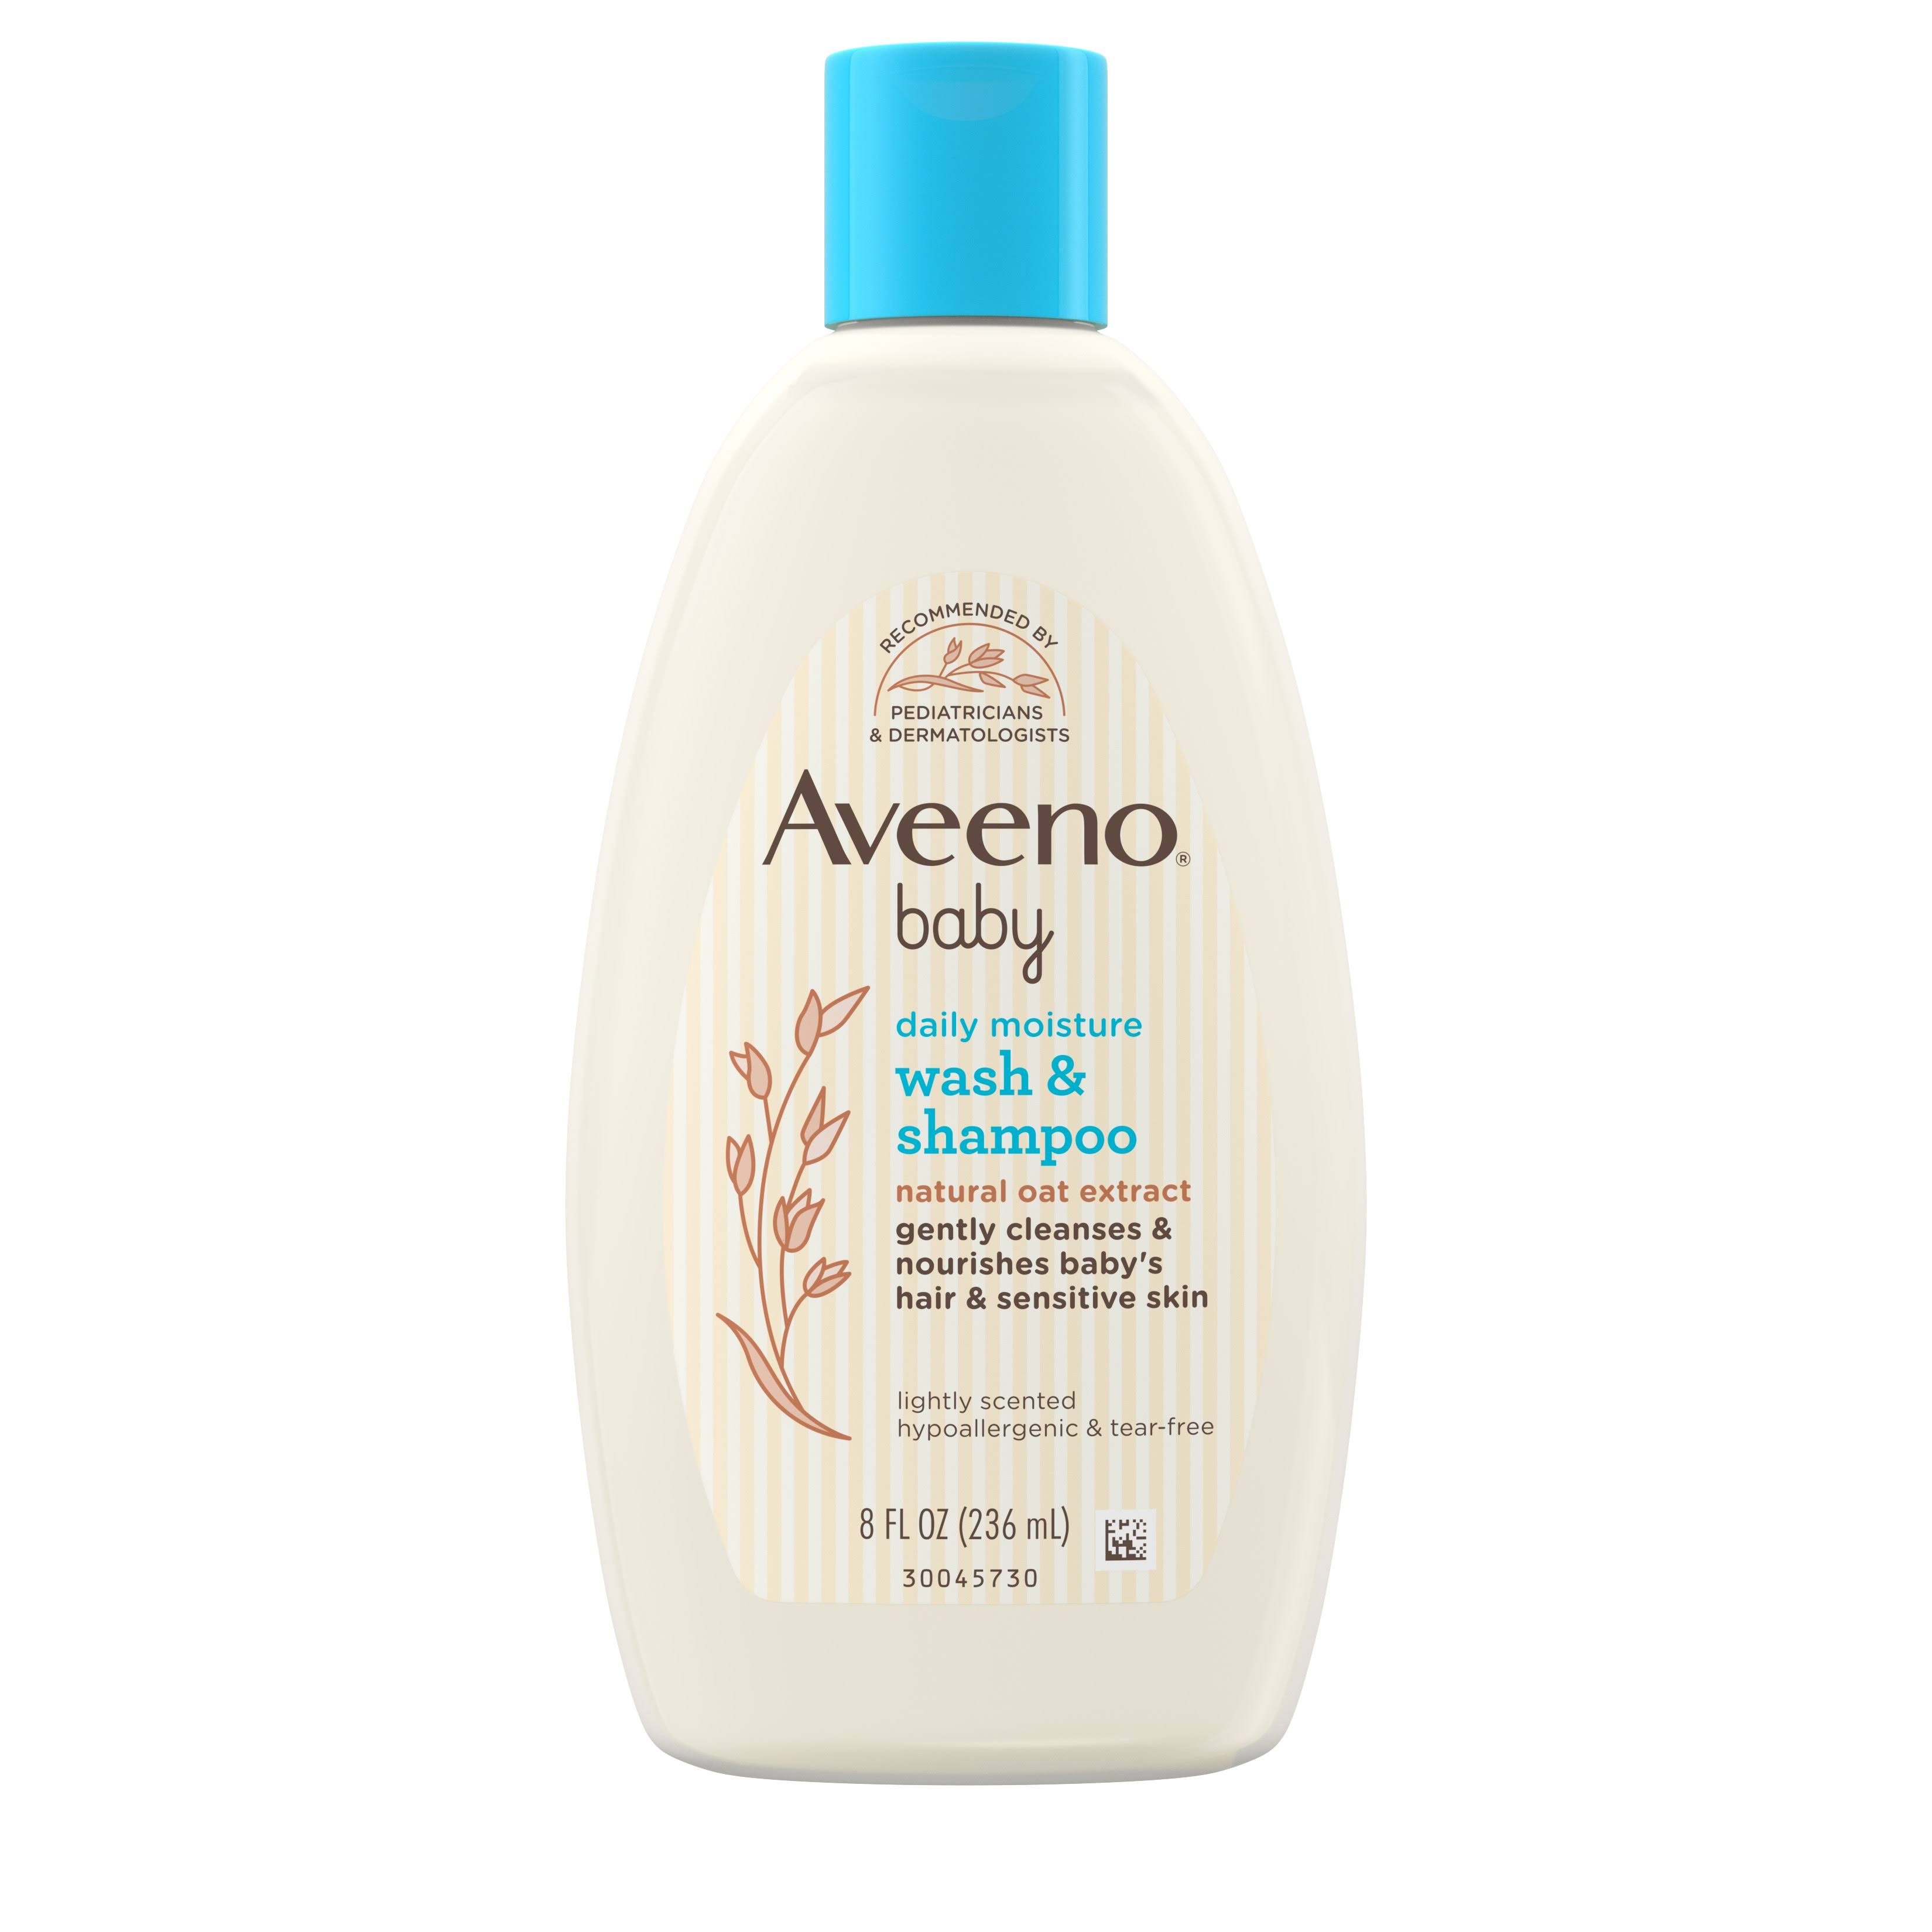 Aveeno Baby Lightly Scented Wash & Shampoo - 236ml